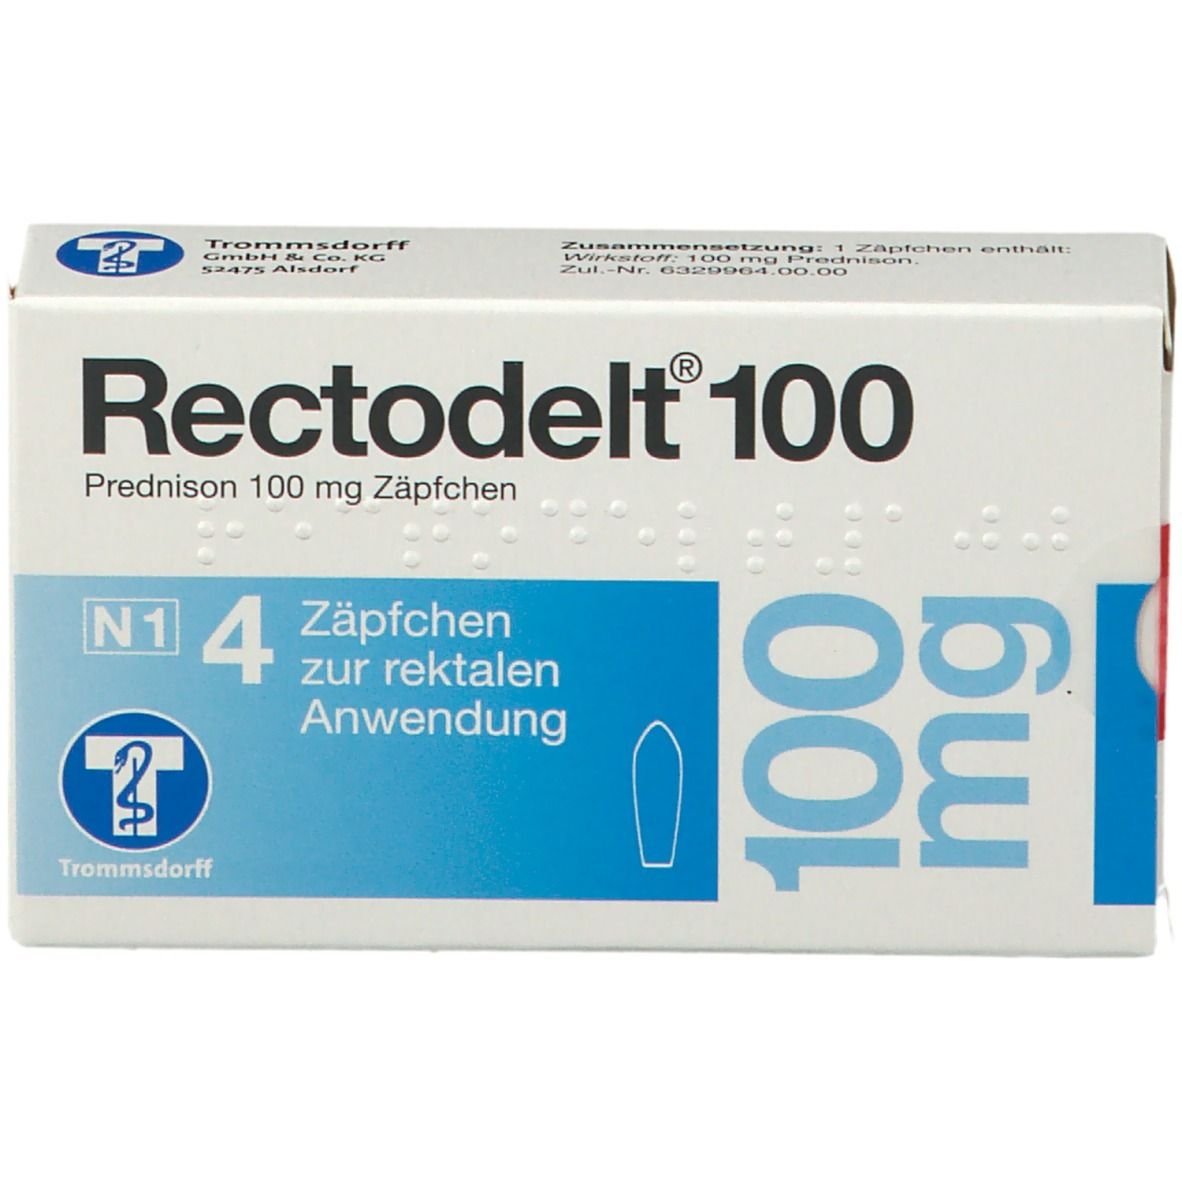 Rectodelt® 100